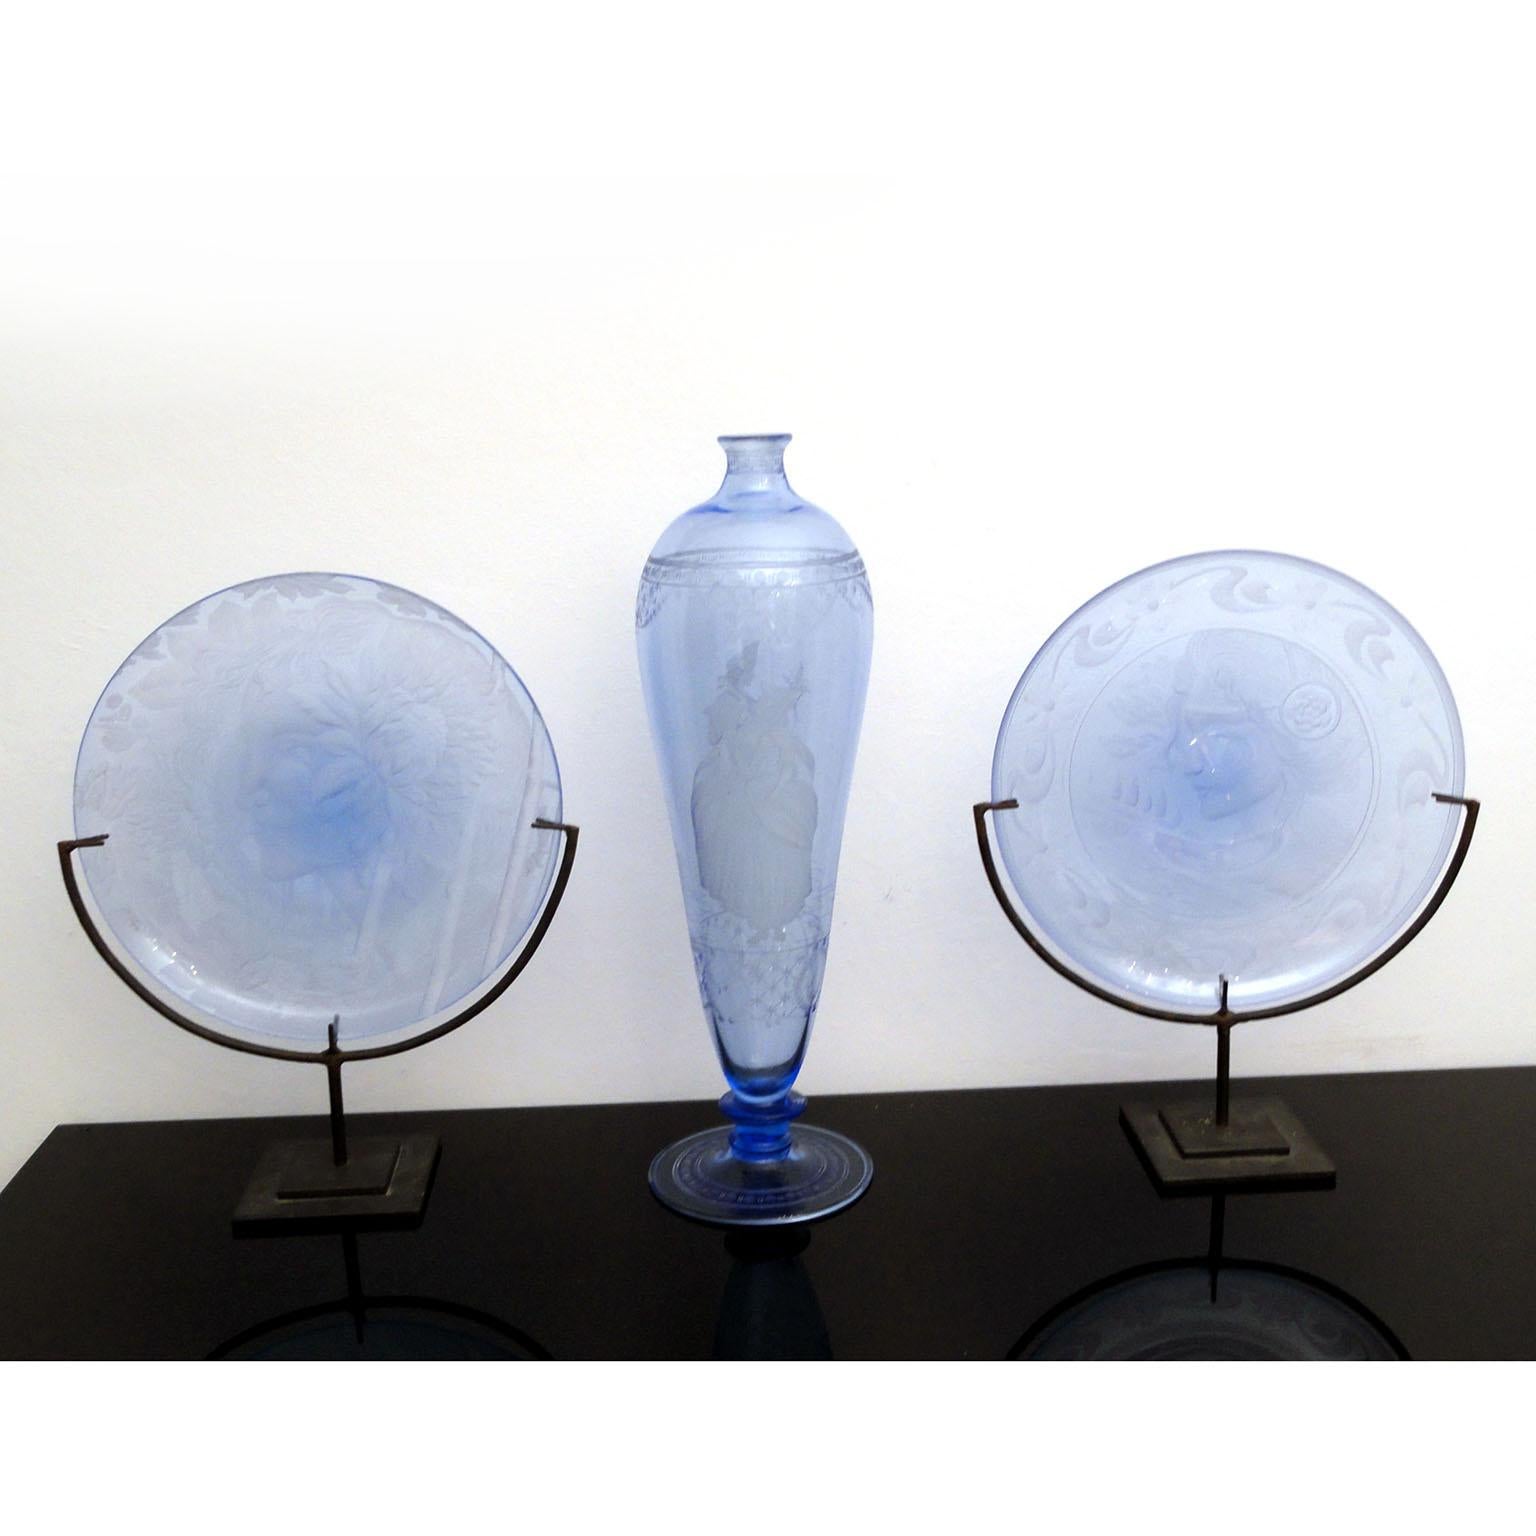 Midcentury Murano Decorative Glass Plate Wheelcut by Franz Pelzel for S.A.L.I.R (Gemalt)